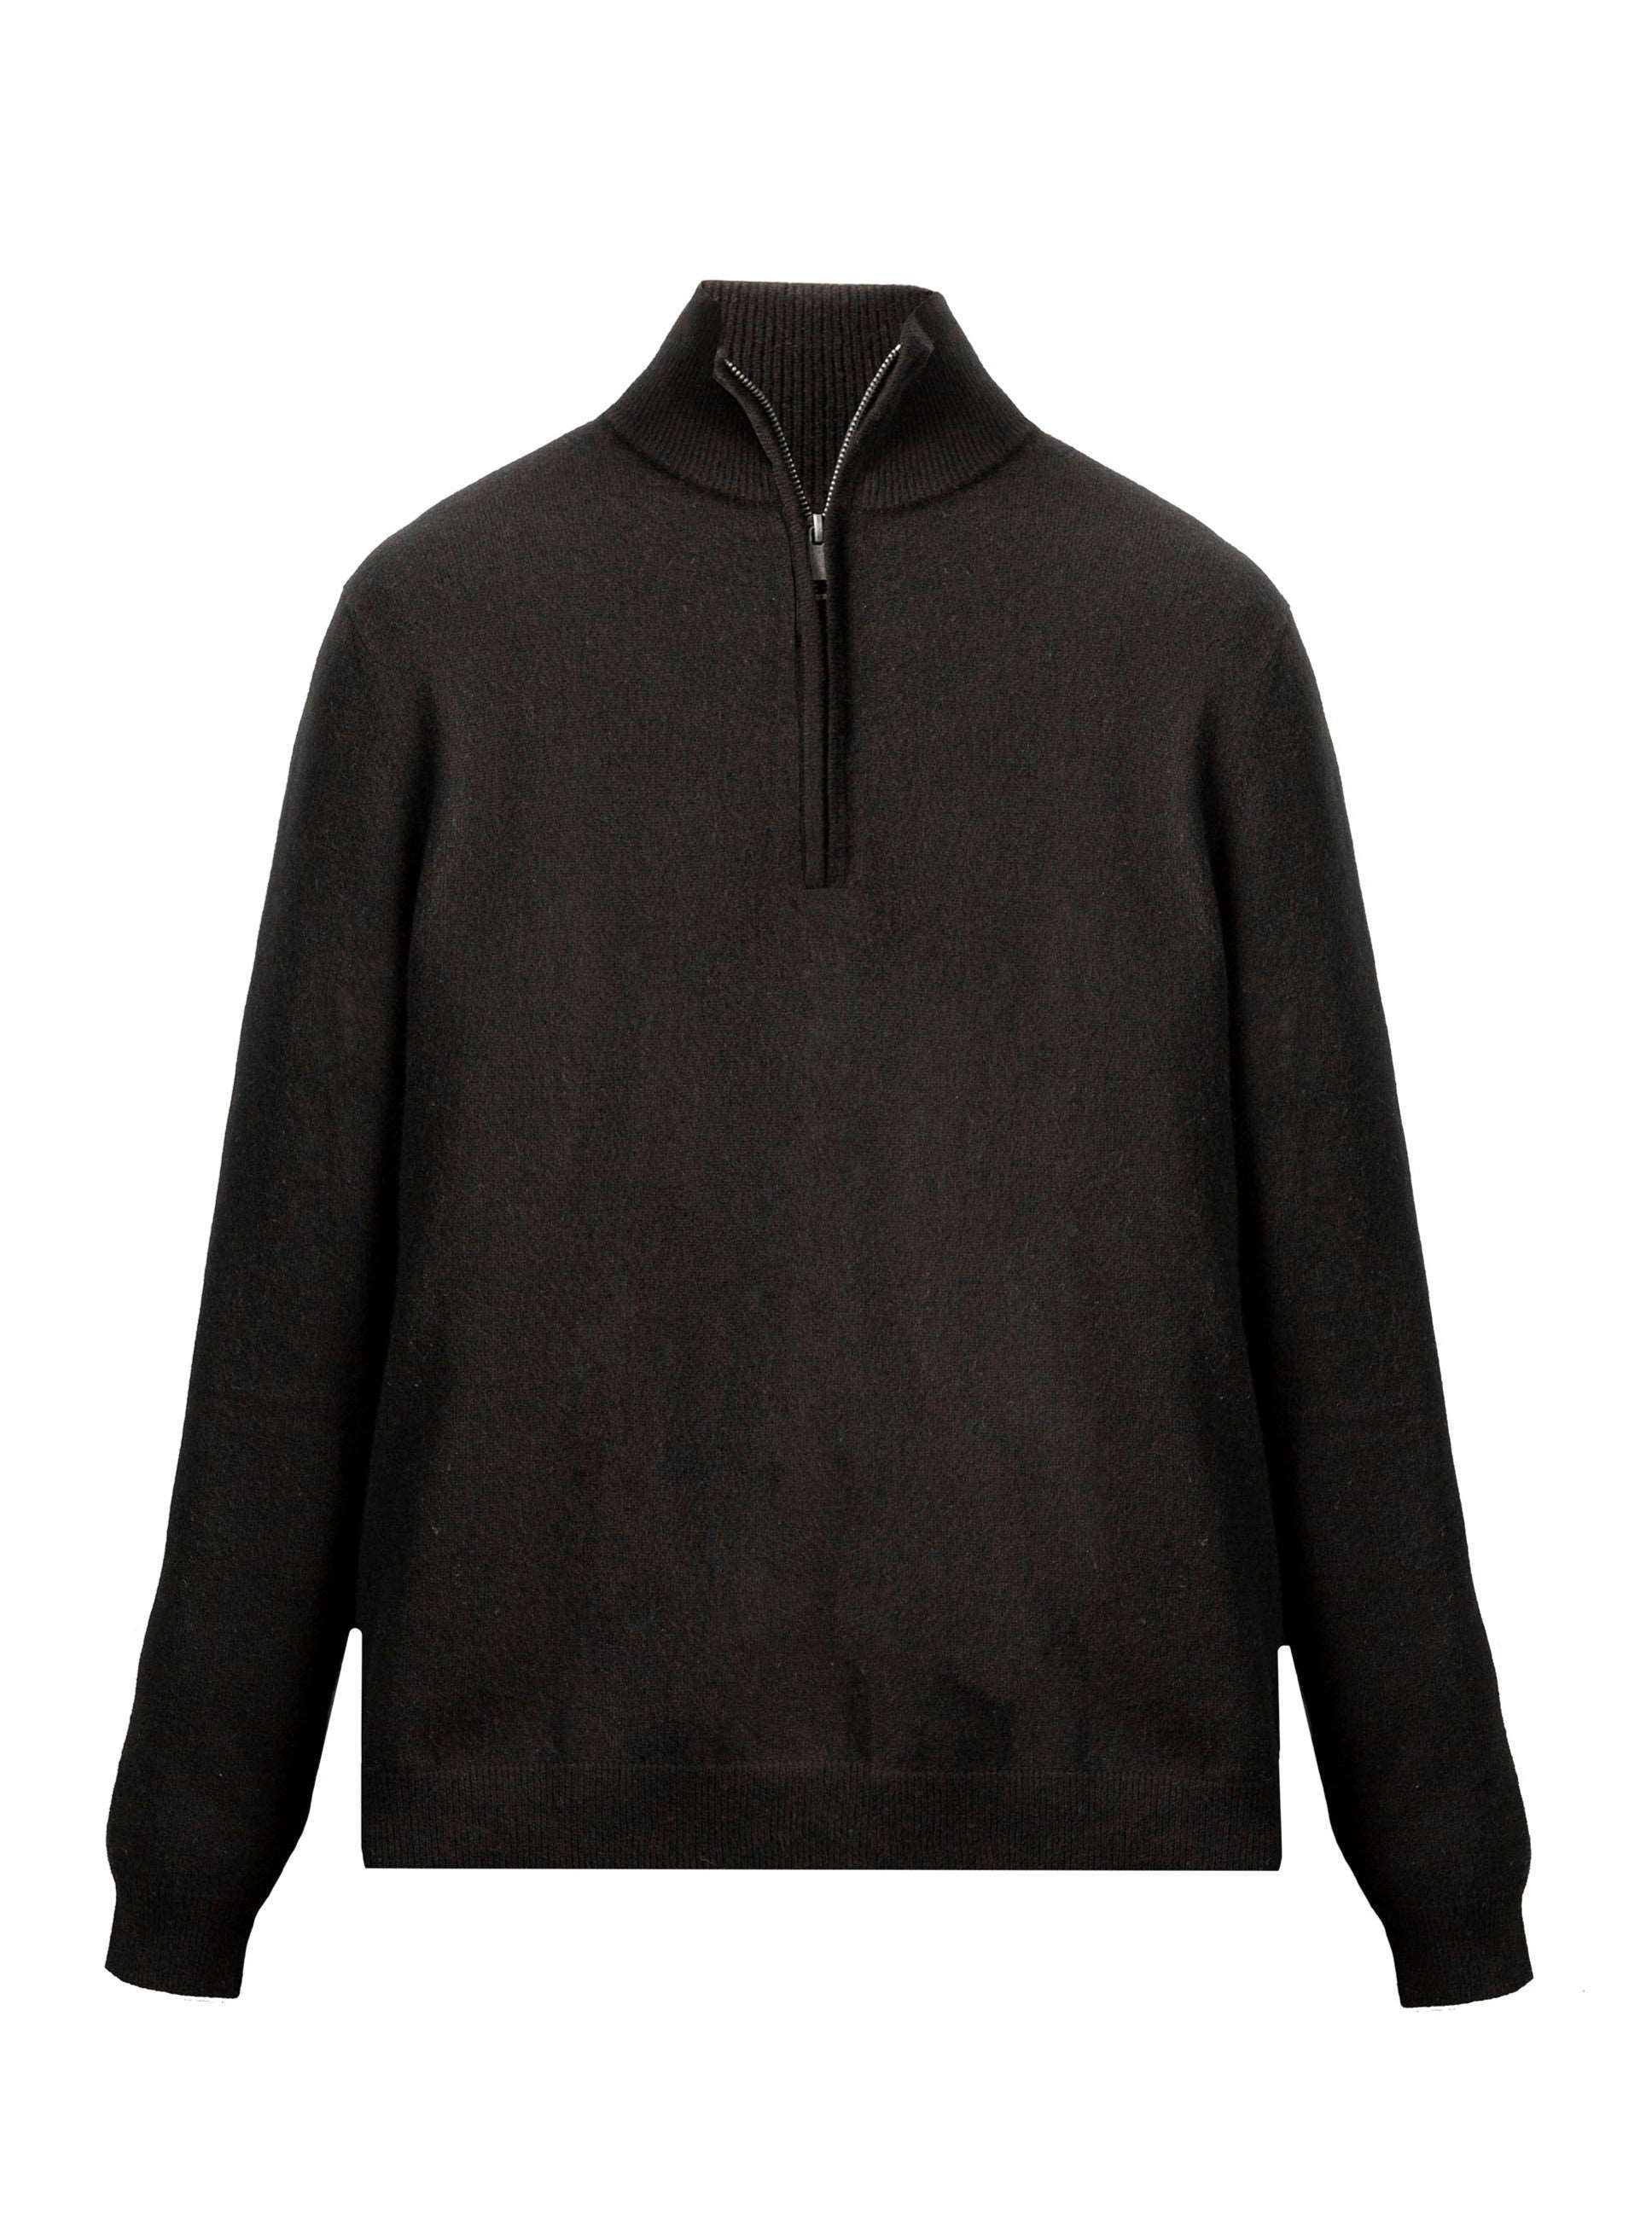 Gent's Zip Neck Cashmere Sweater